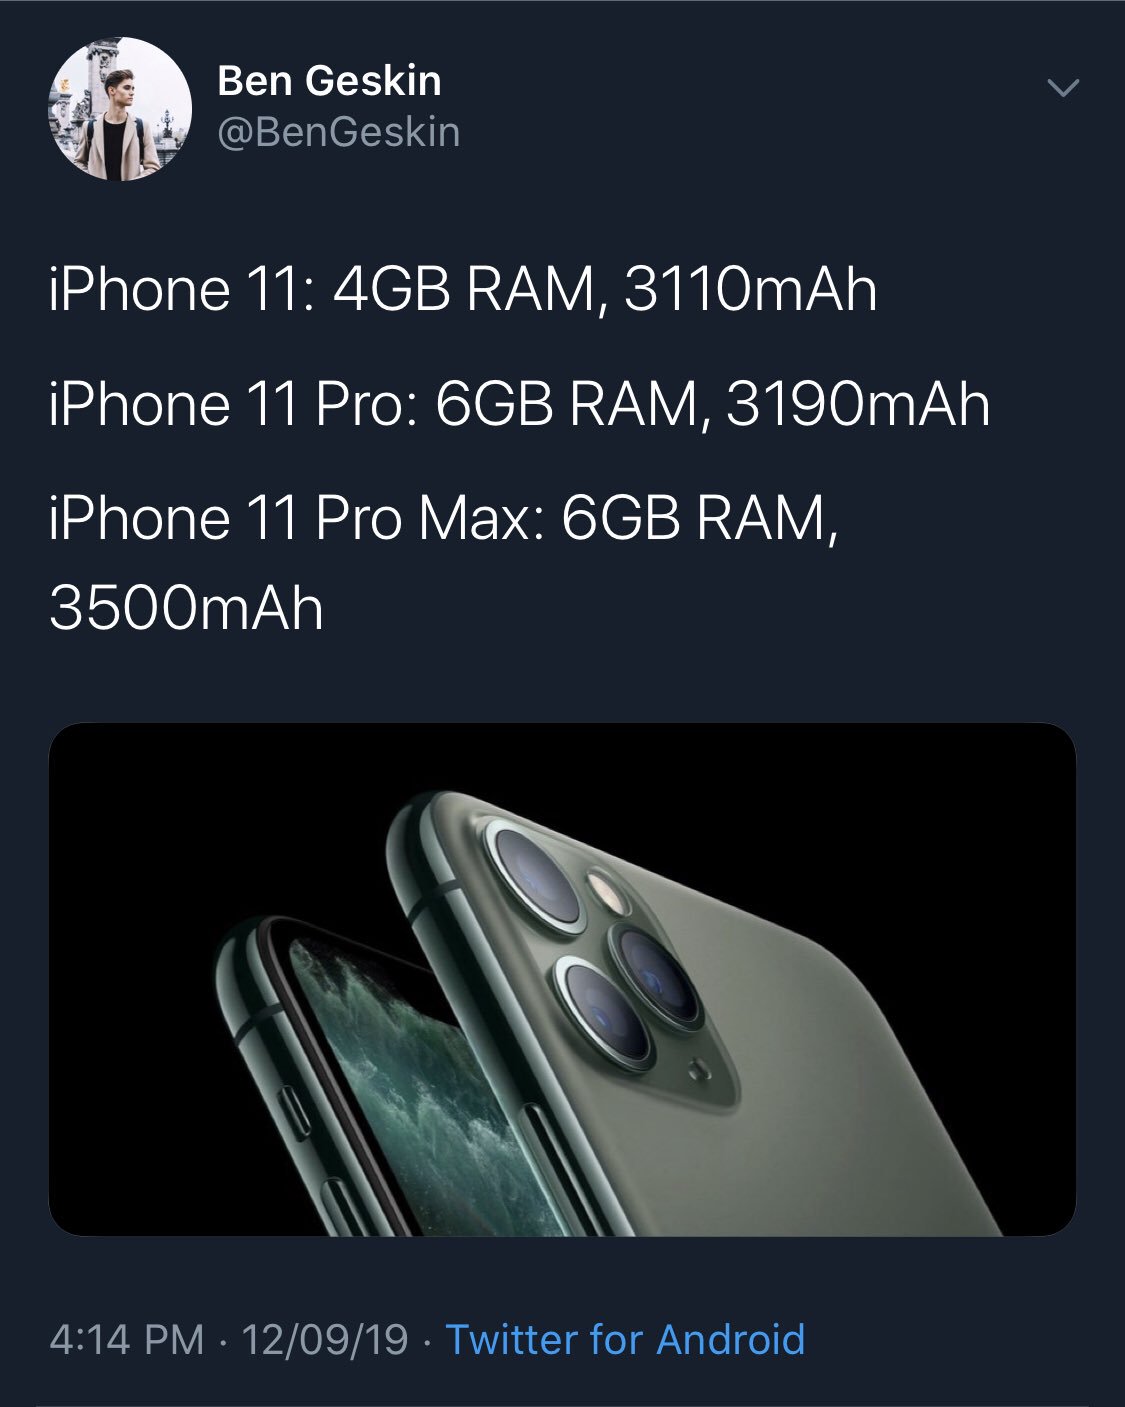 Tuit de Ben Geskin sobre la cantidad de RAM del iPhone 11 Pro